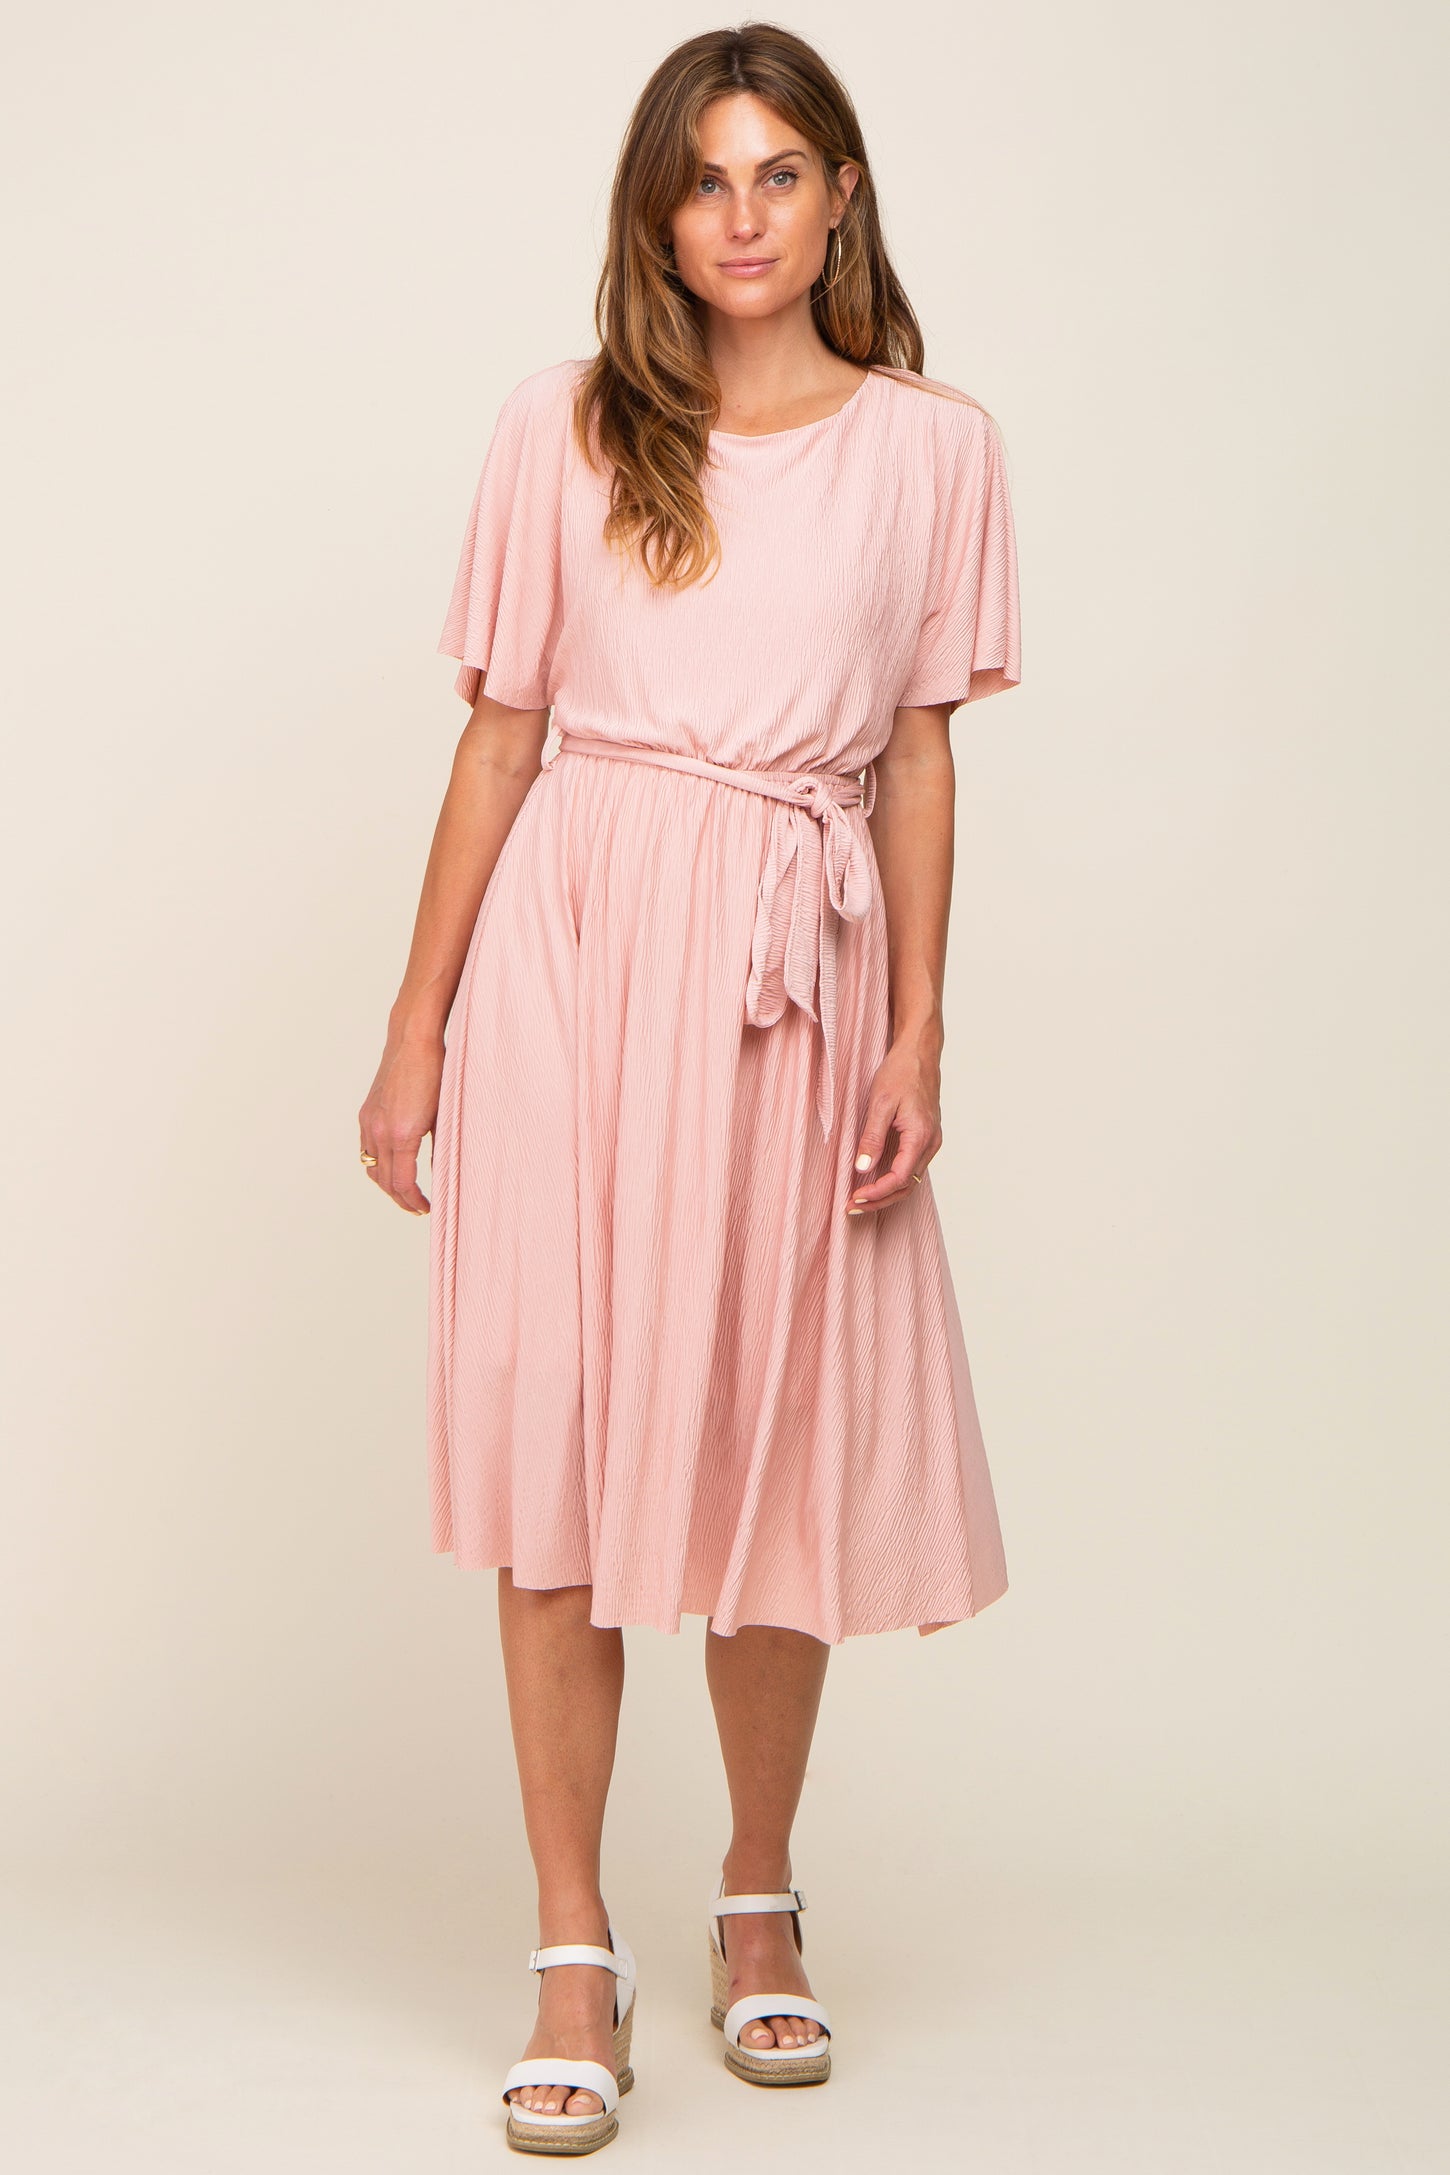 Pink Crinkle Knit Tie Waist Short Sleeve Dress